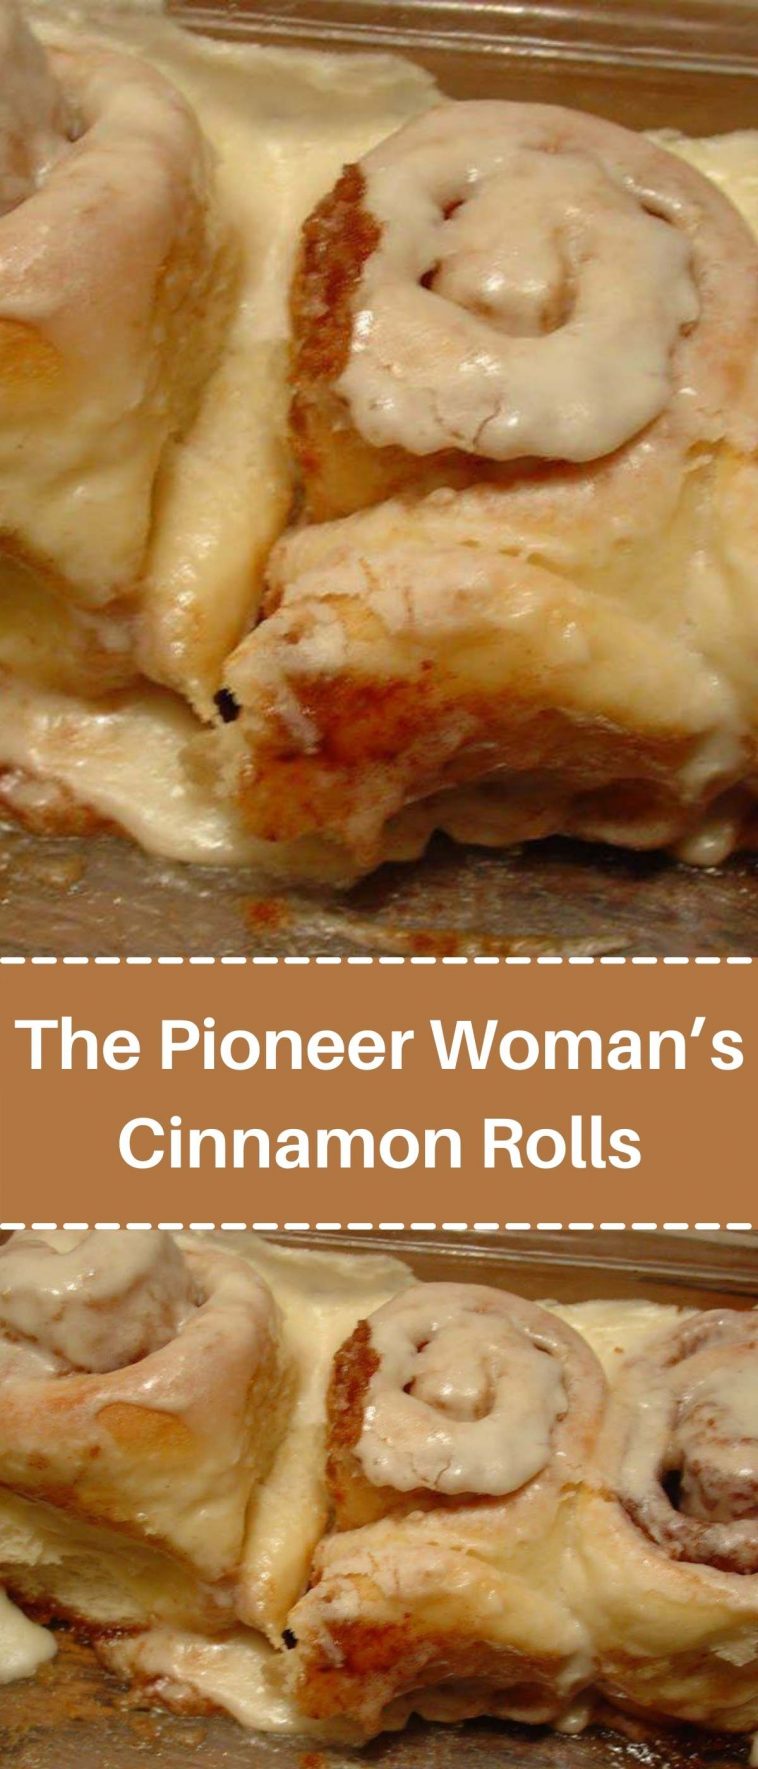 The Pioneer Woman’s Cinnamon Rolls